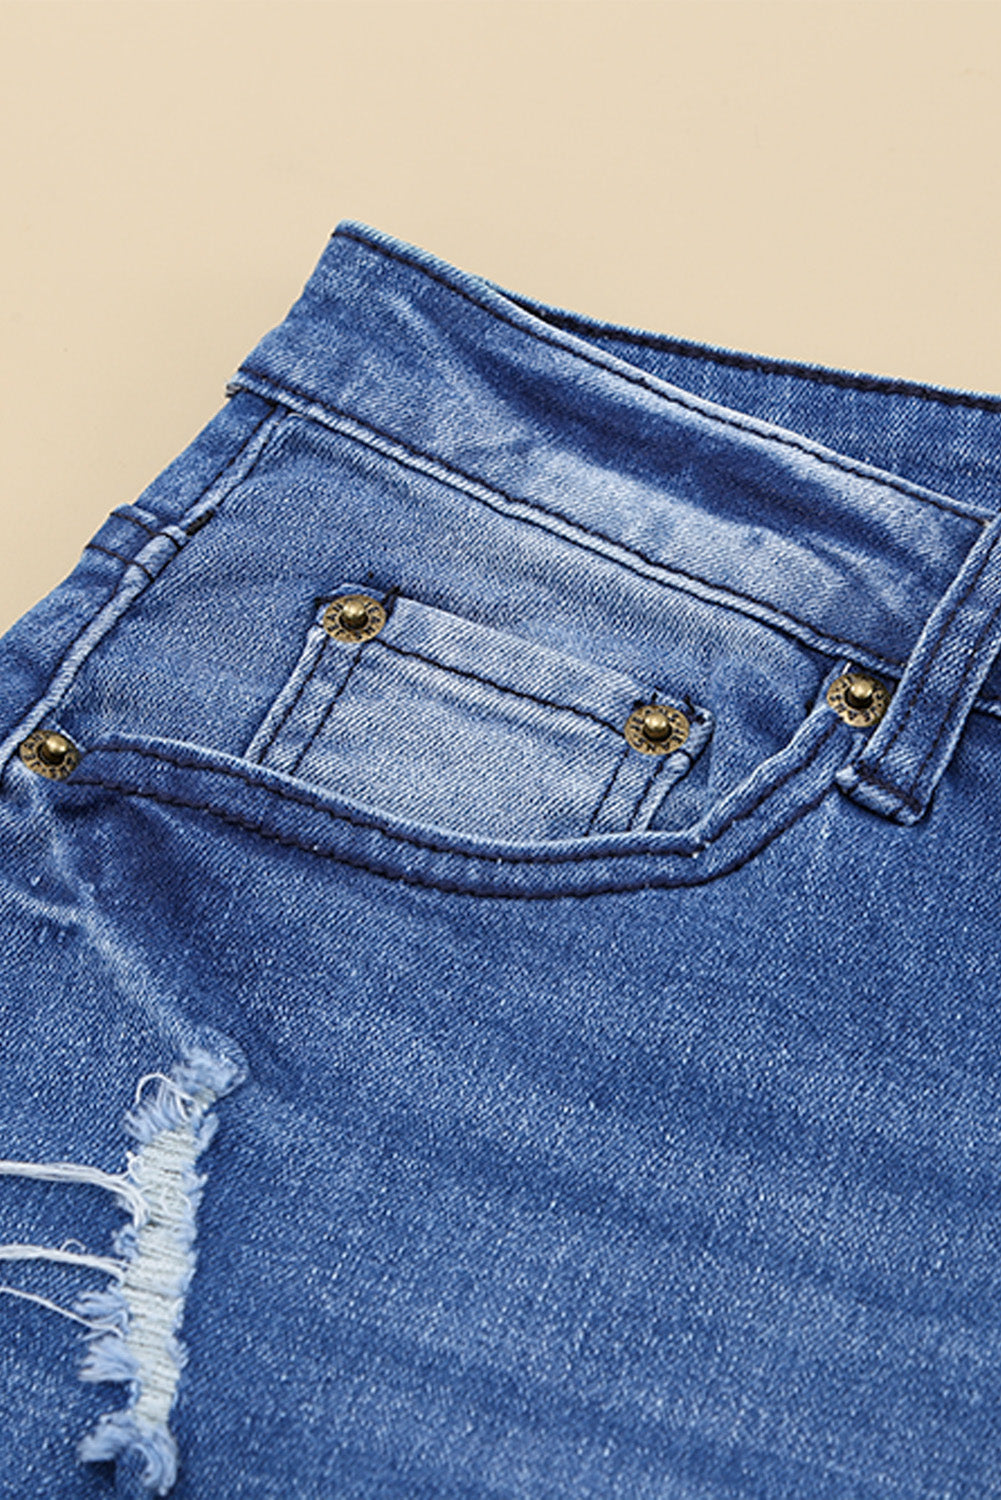 Distressed Flare Leg Jeans with Pockets - DromedarShop.com Online Boutique